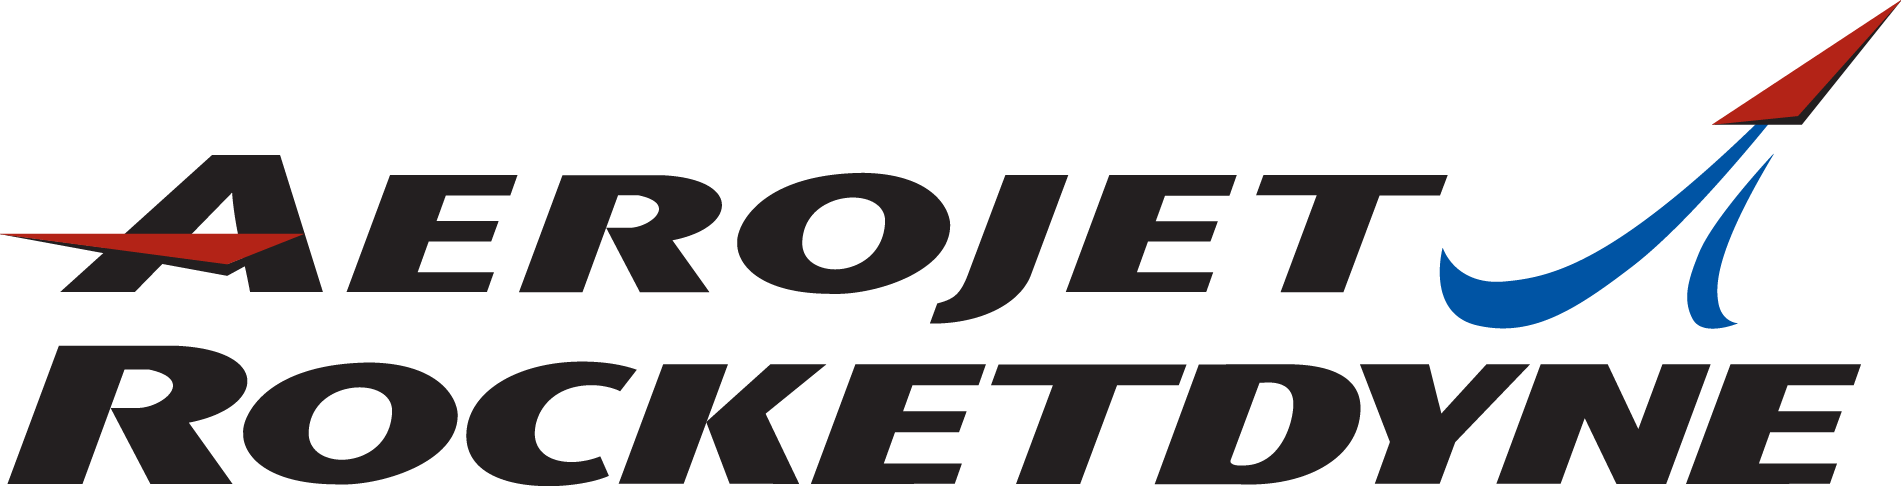 Rocketdyne Logo - Aerojet Rocketdyne | Aerojet Rocketdyne Holdings, Inc.